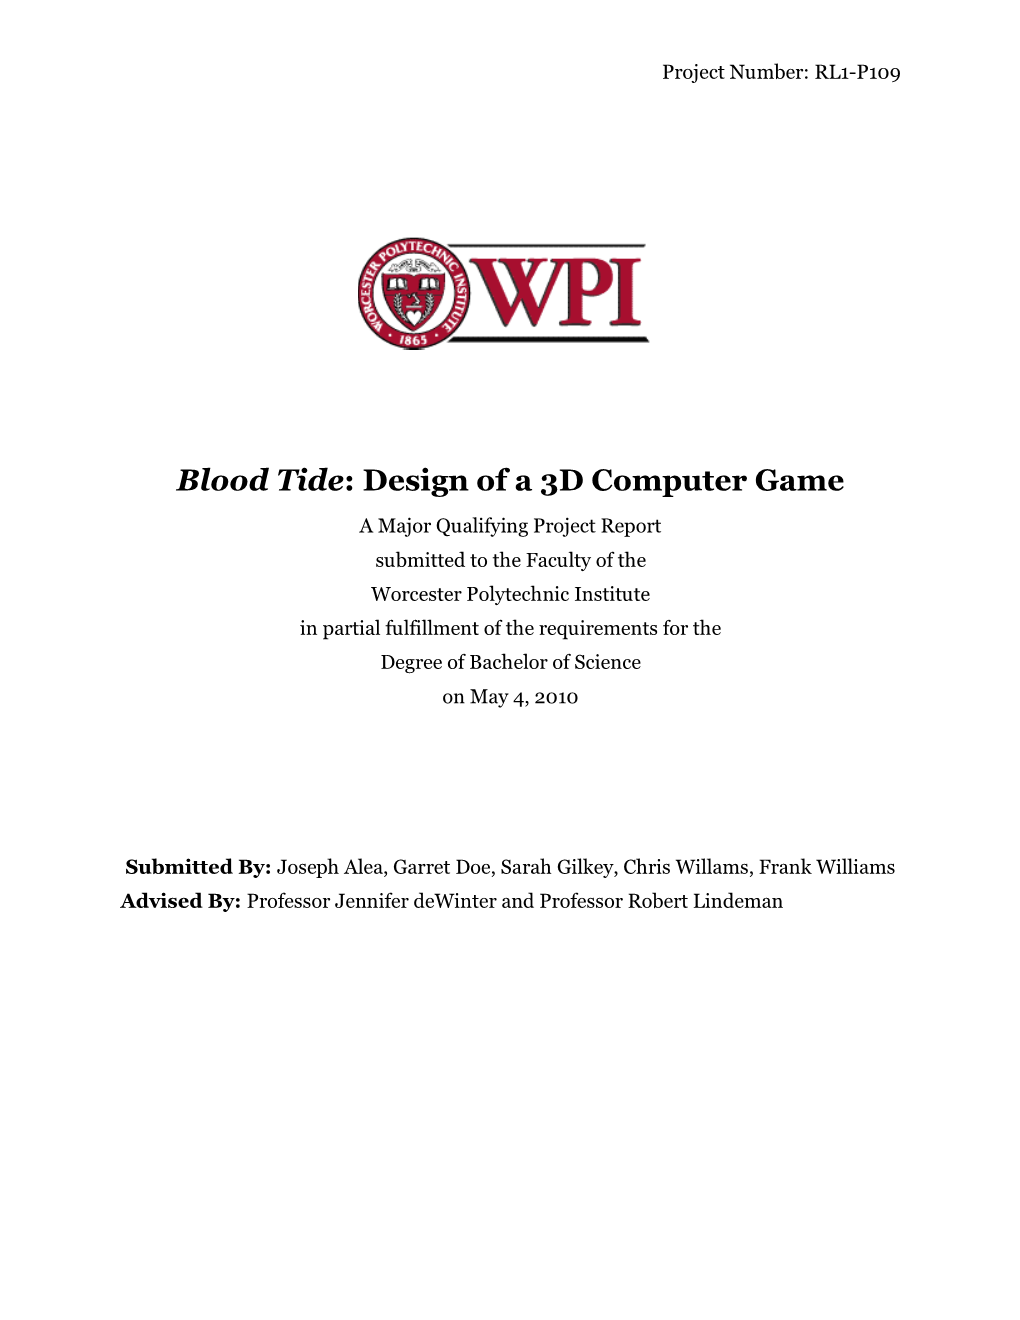 Blood Tide: Design of a 3D Computer Game